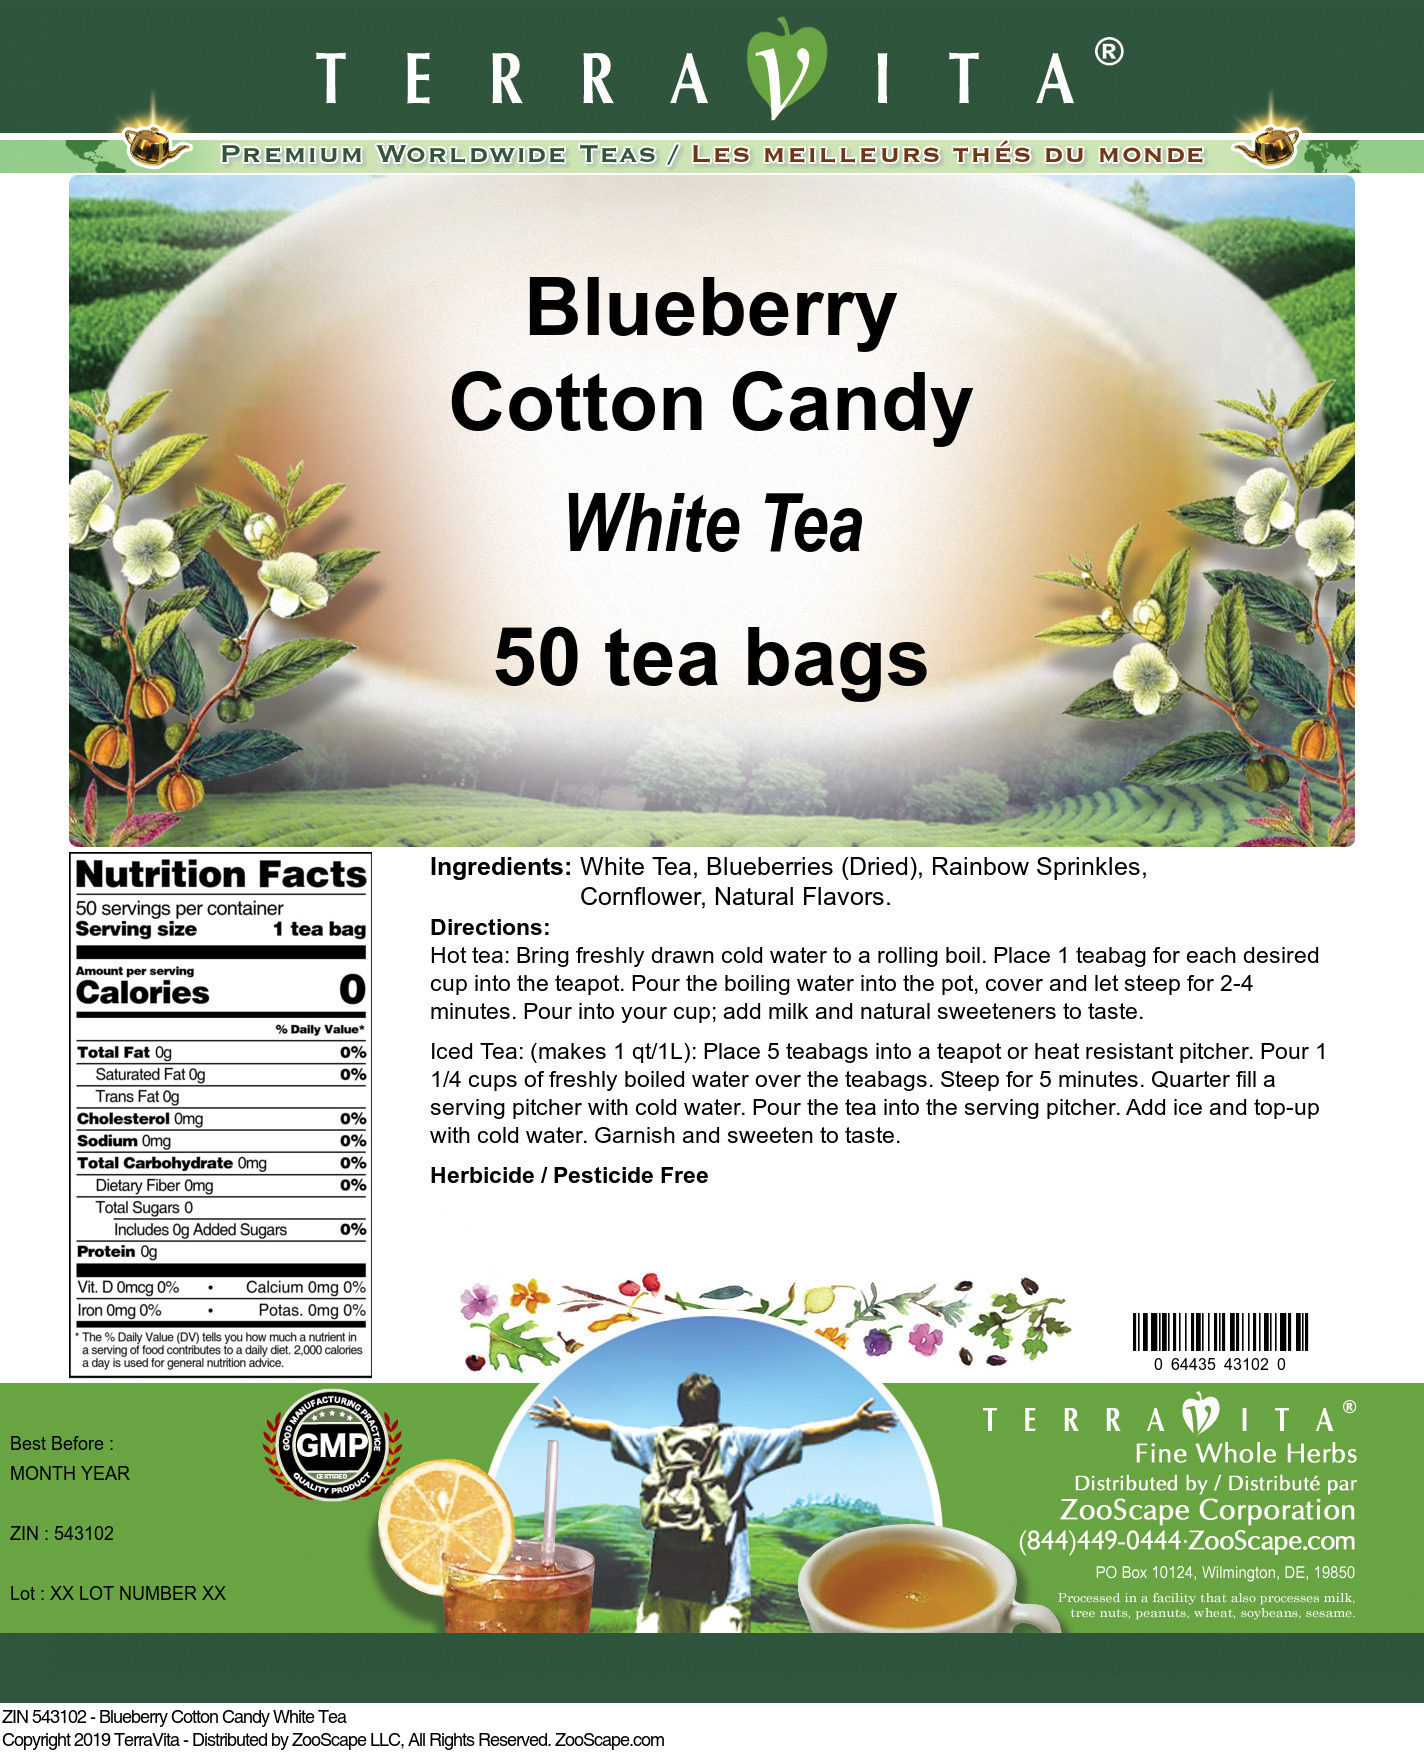 TerraVita Blueberry Cotton Candy White Tea (50 tea bags, ZIN: 543102)